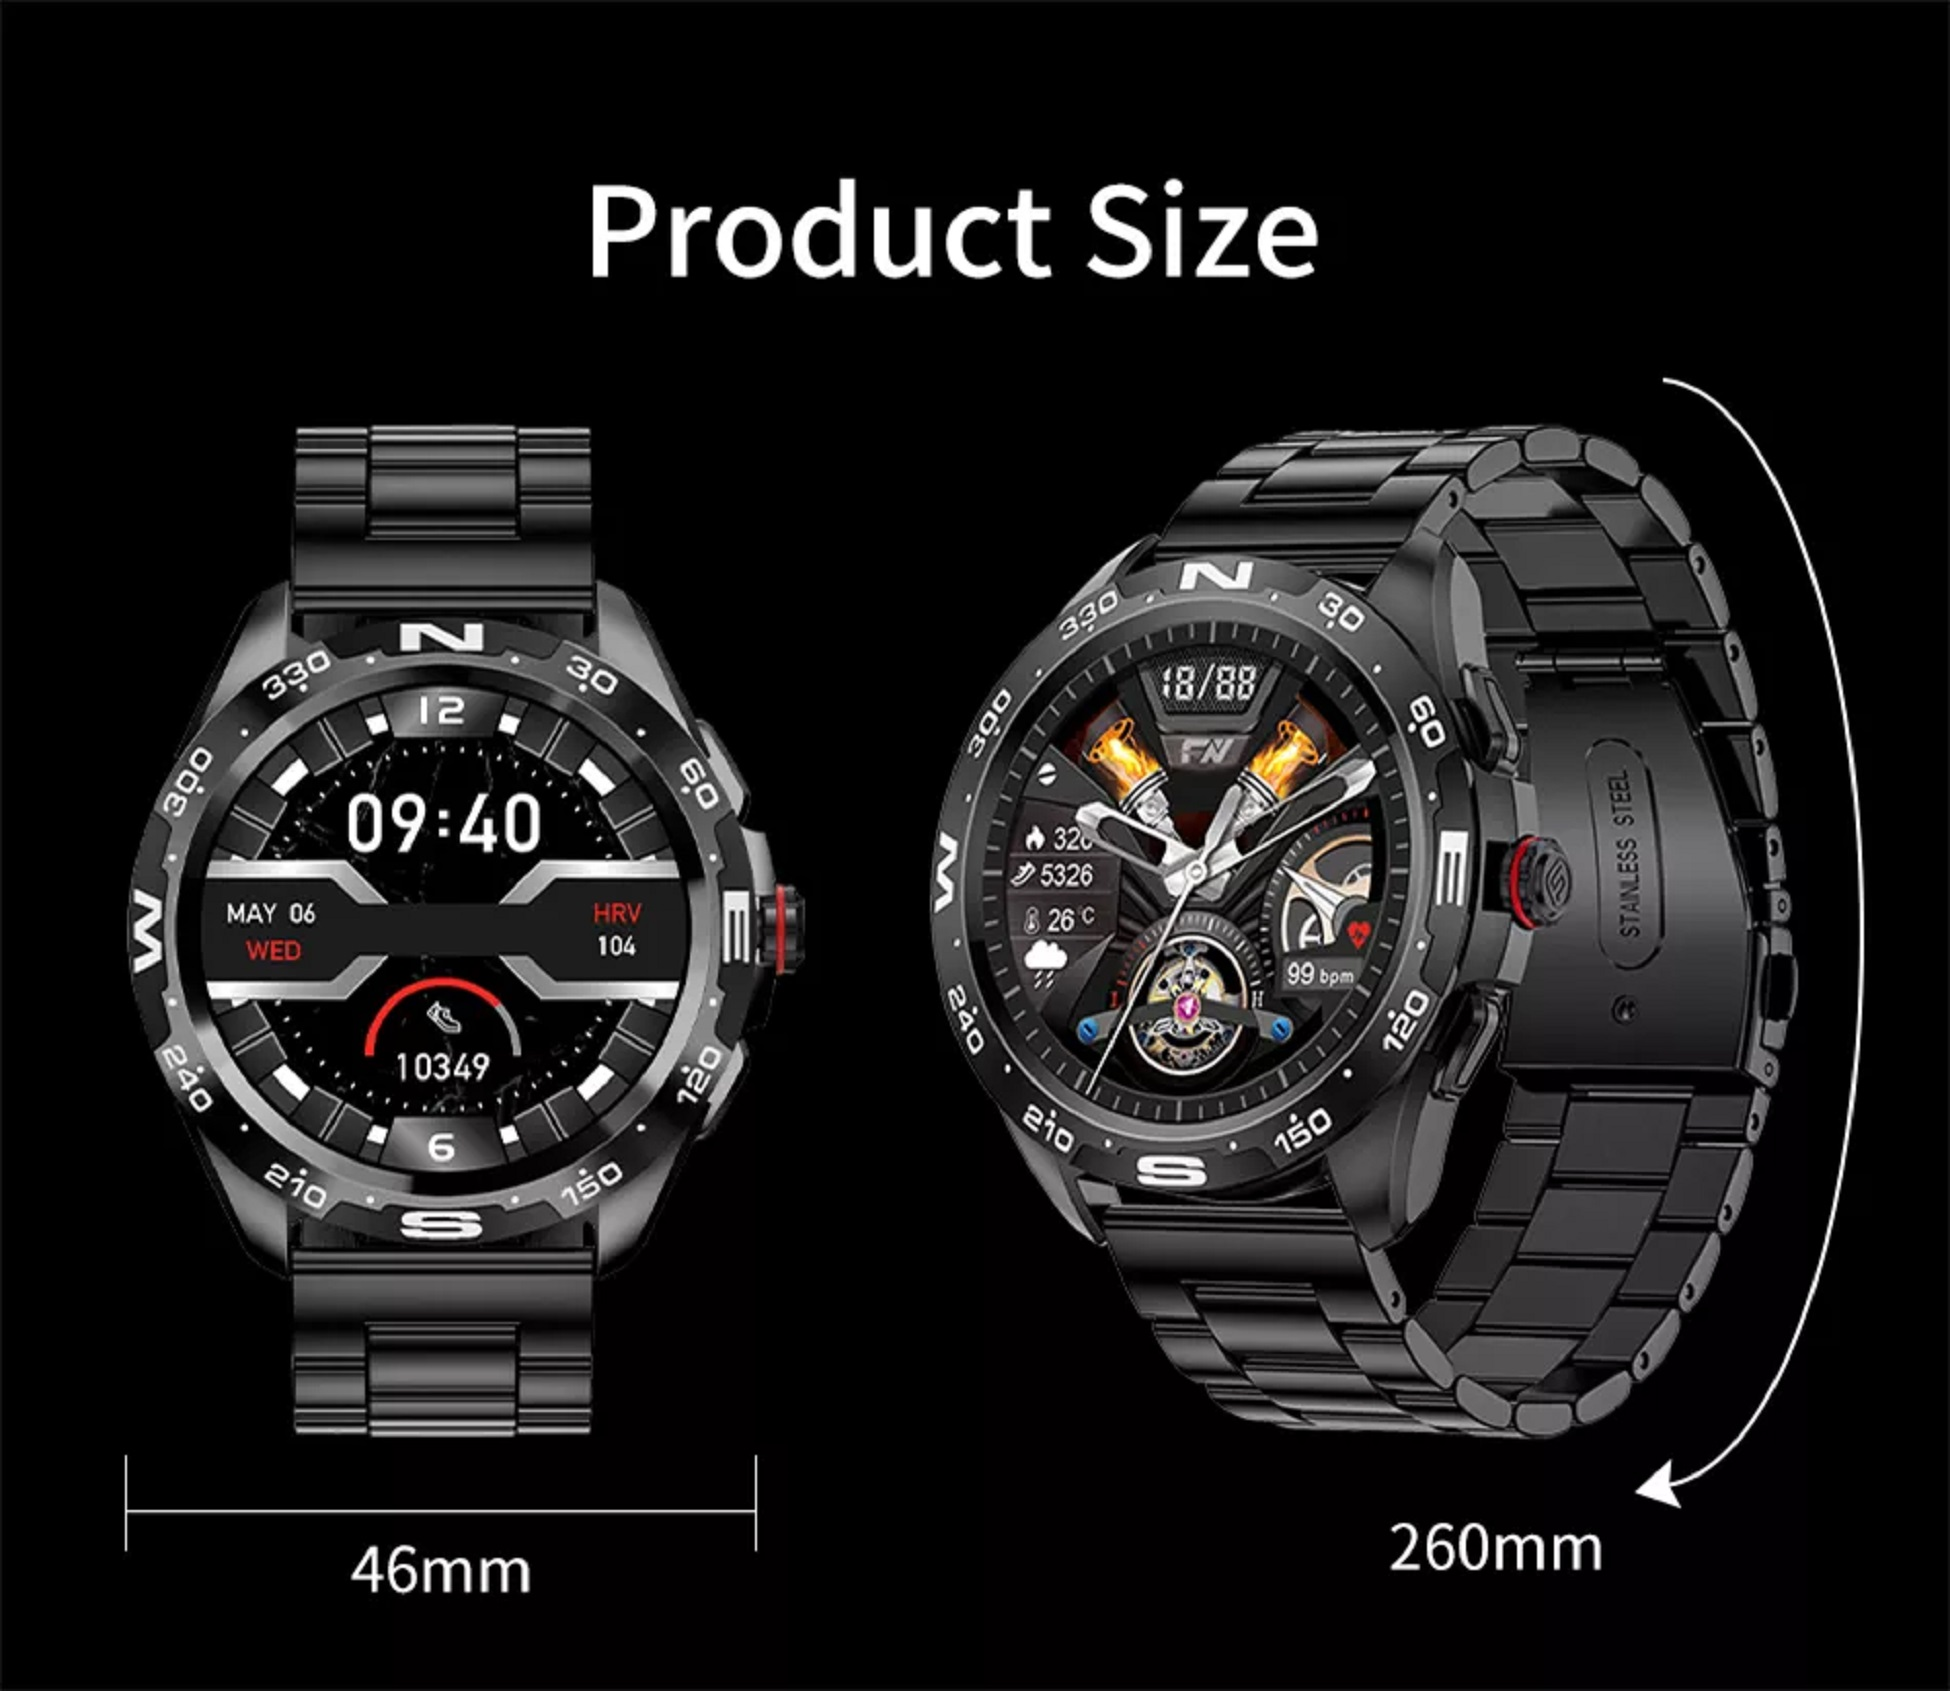 Silver LIGE Smartwatch BW0327B Silicone,